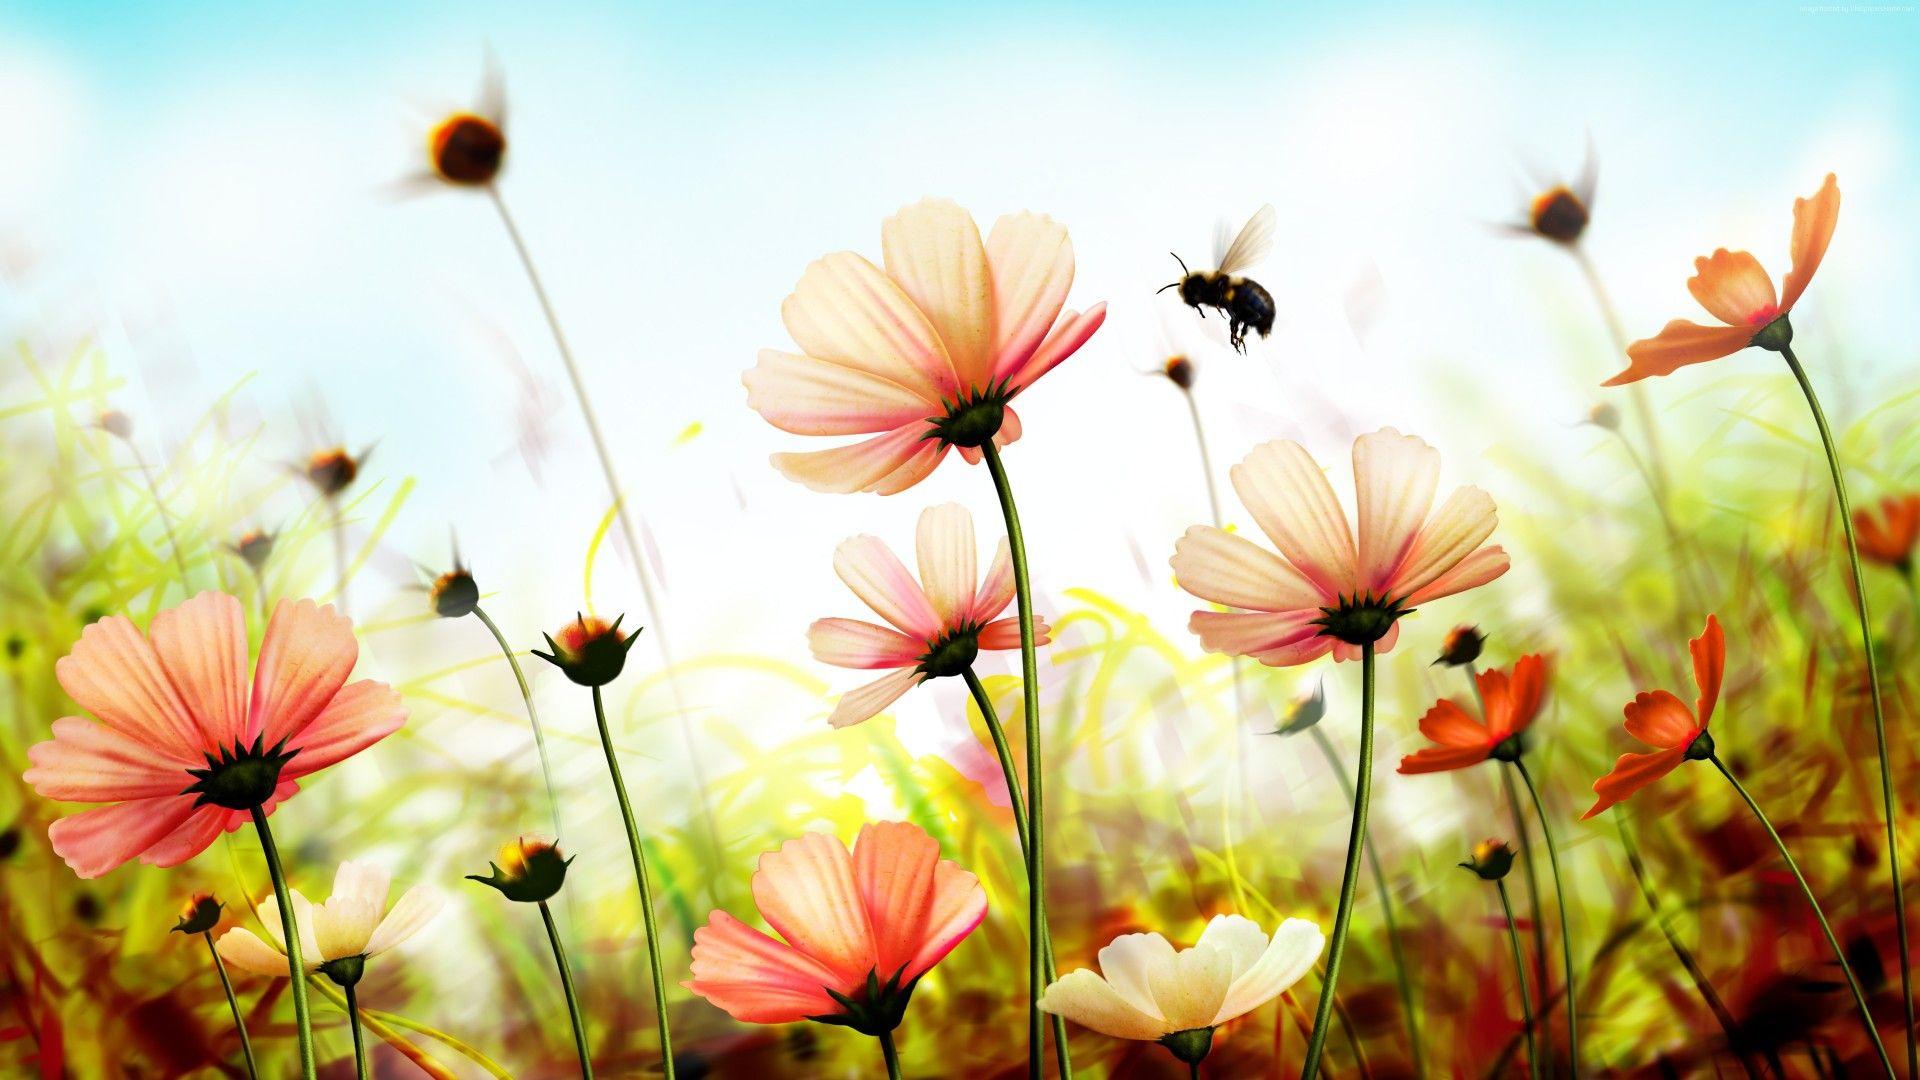 Flower Wallpaper Images - Free Download on Freepik